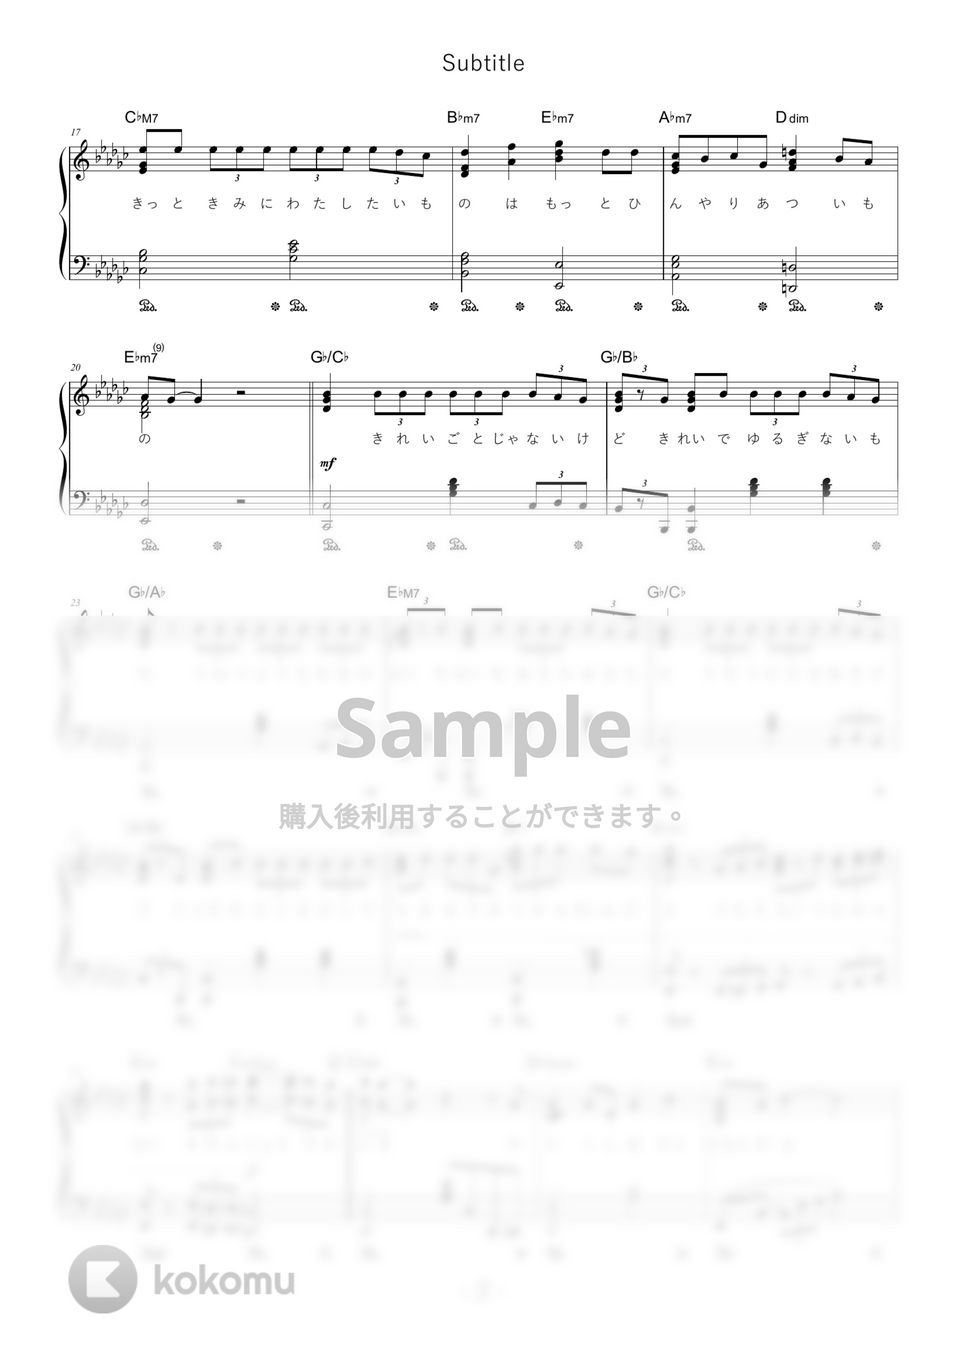 Official髭男dism - Subtitle (難易度:★★★★★/歌詞・コード・ペダル付き/ドラマ『silent』主題歌) by Dさん